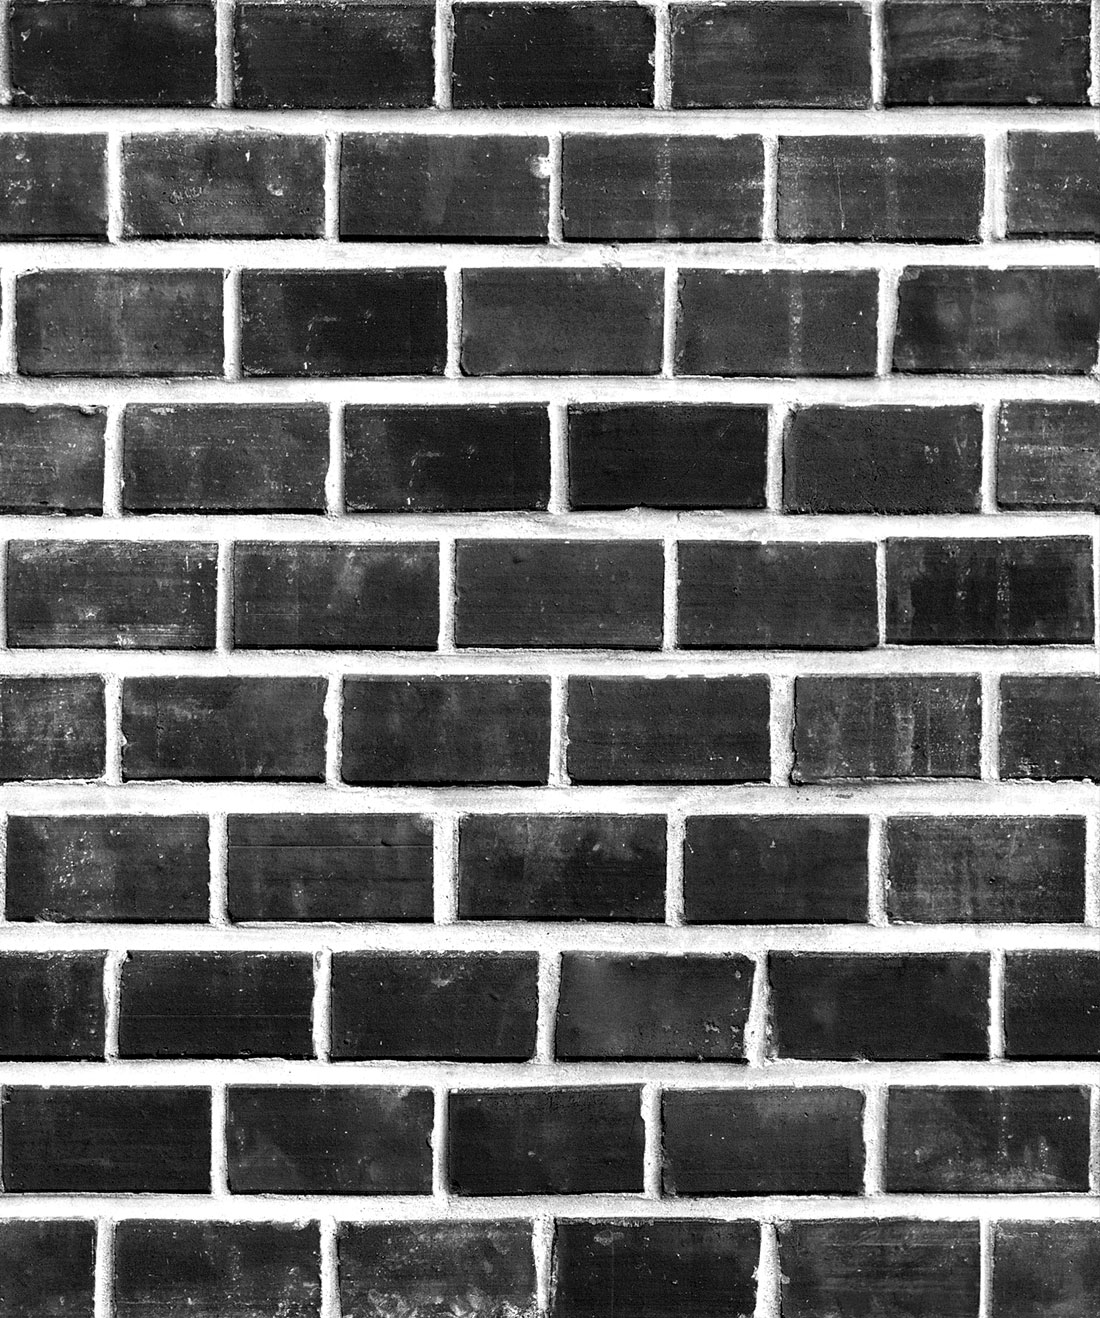 Lubeck Bricks Wallpaper Exposed Black Milton King